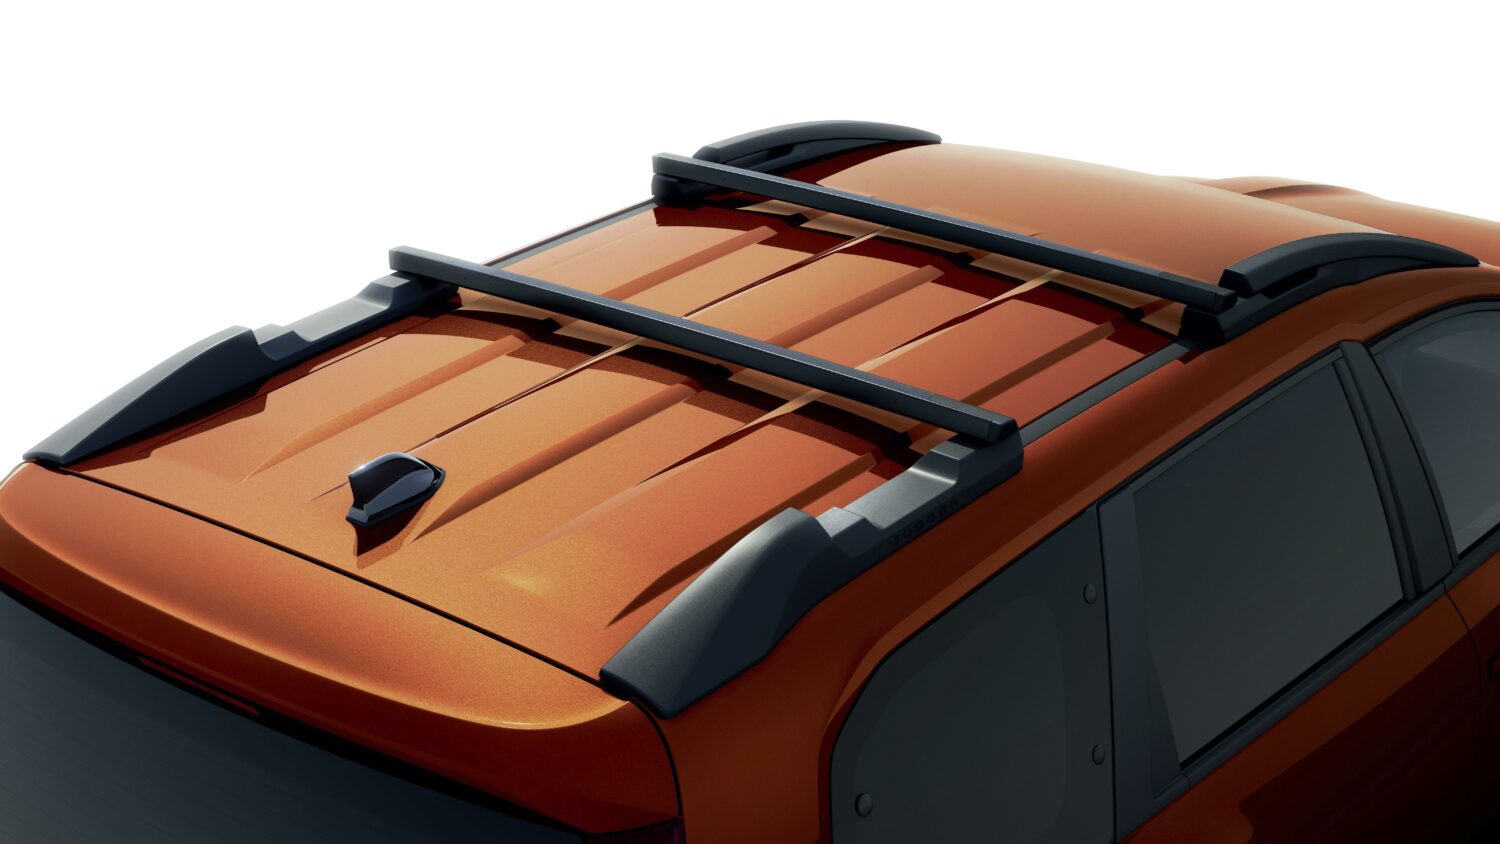 2021 - Story - Barres de toit modulables Dacia : un équipement malin pour Jogger